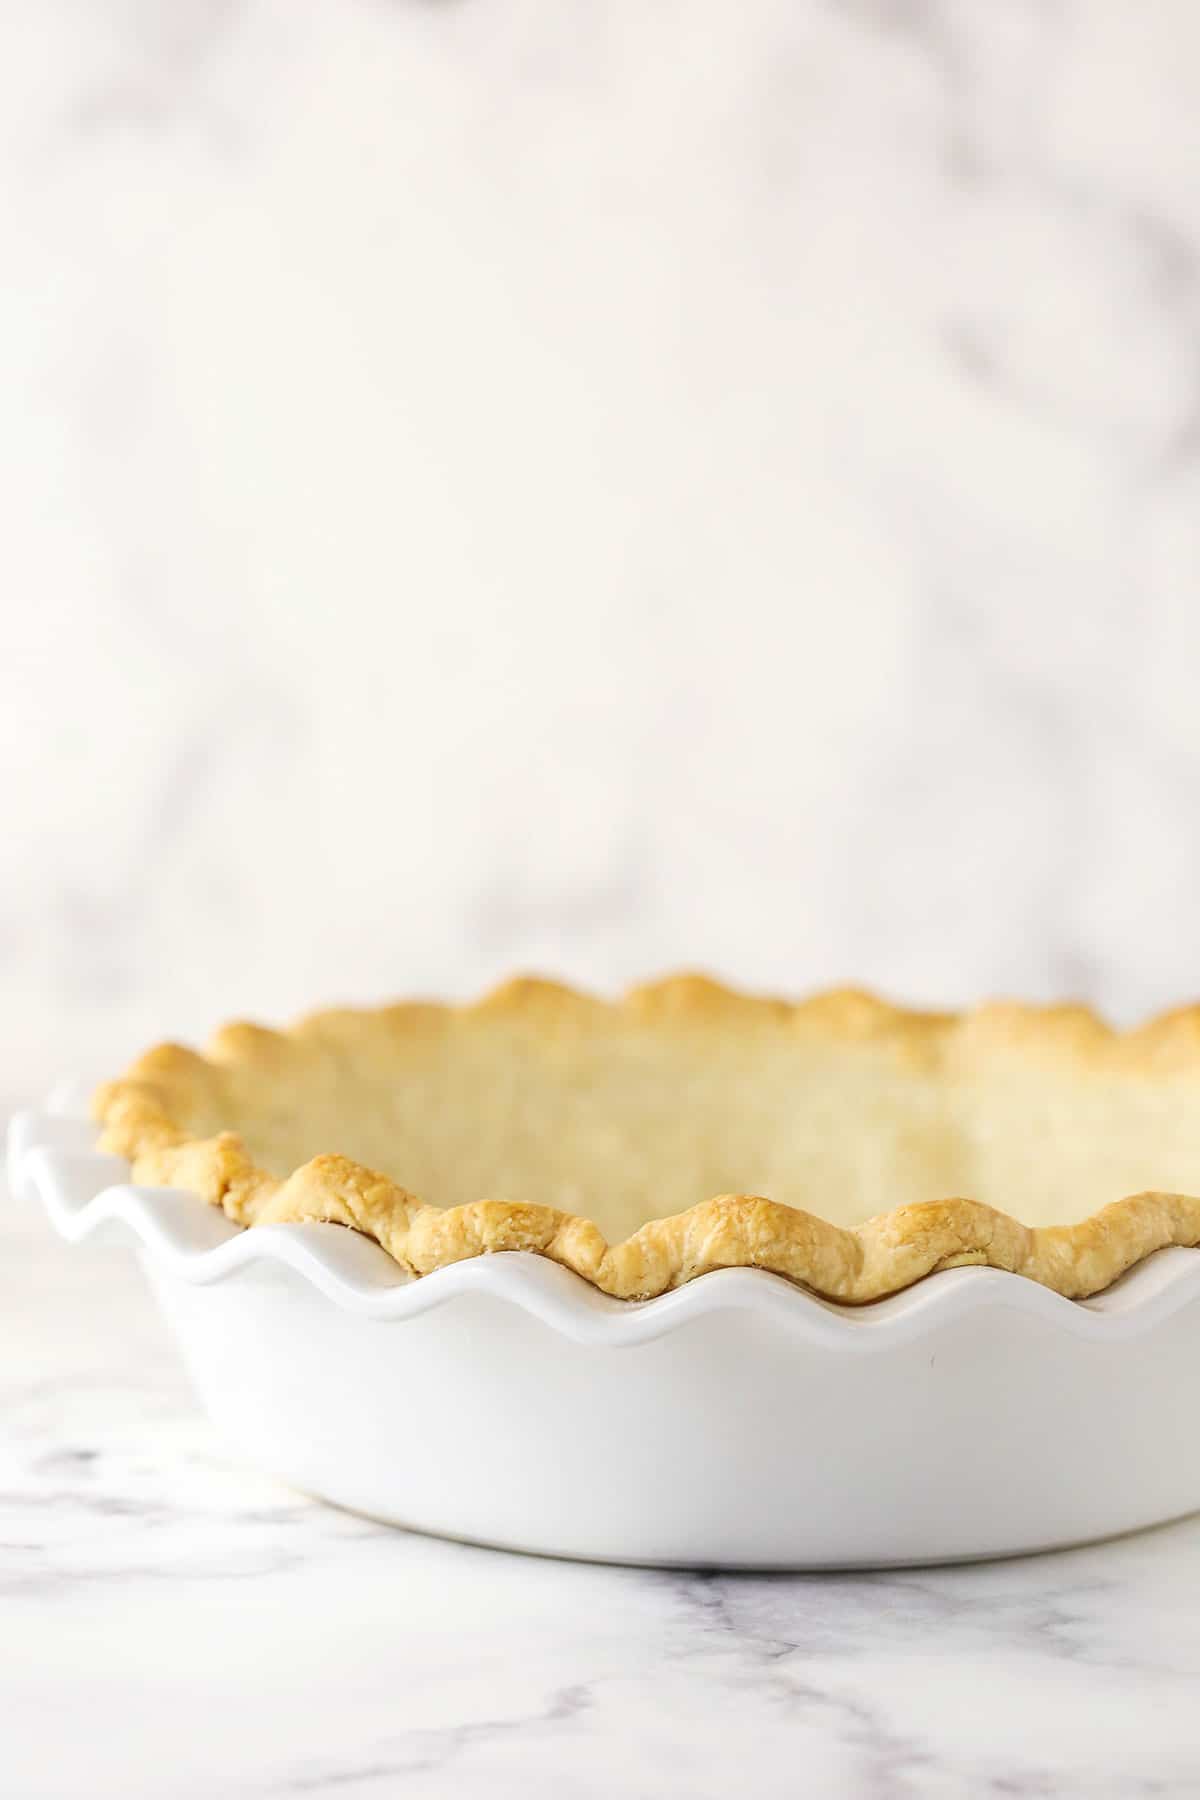 blind baked pie crust in white pie plate